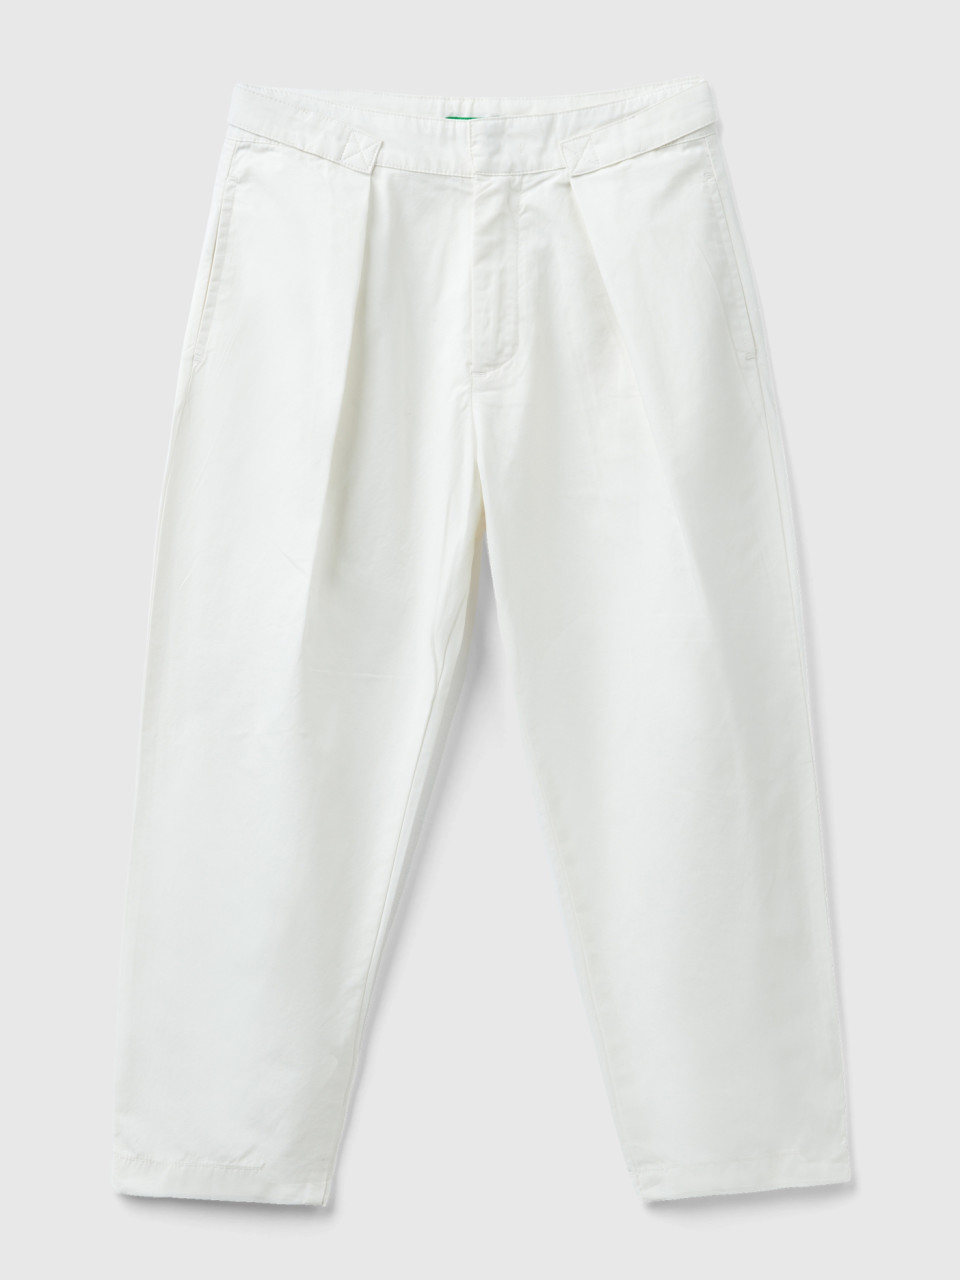 Benetton, Trousers In Pure Linen, Creamy White, Kids